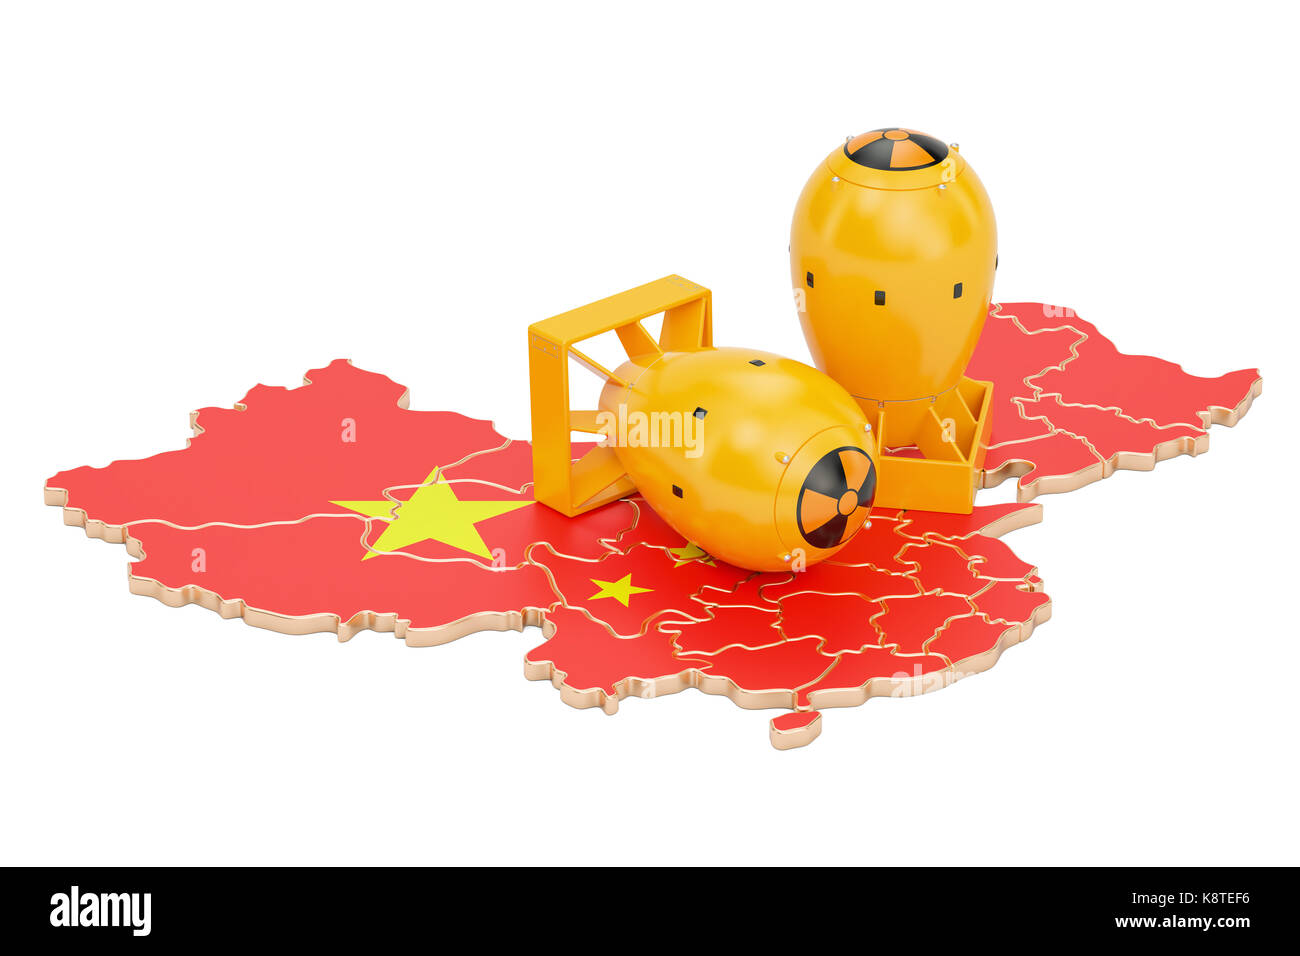 Chinesische Karte mit nuklearen Waffe Konzept, 3D-Rendering Stockfoto